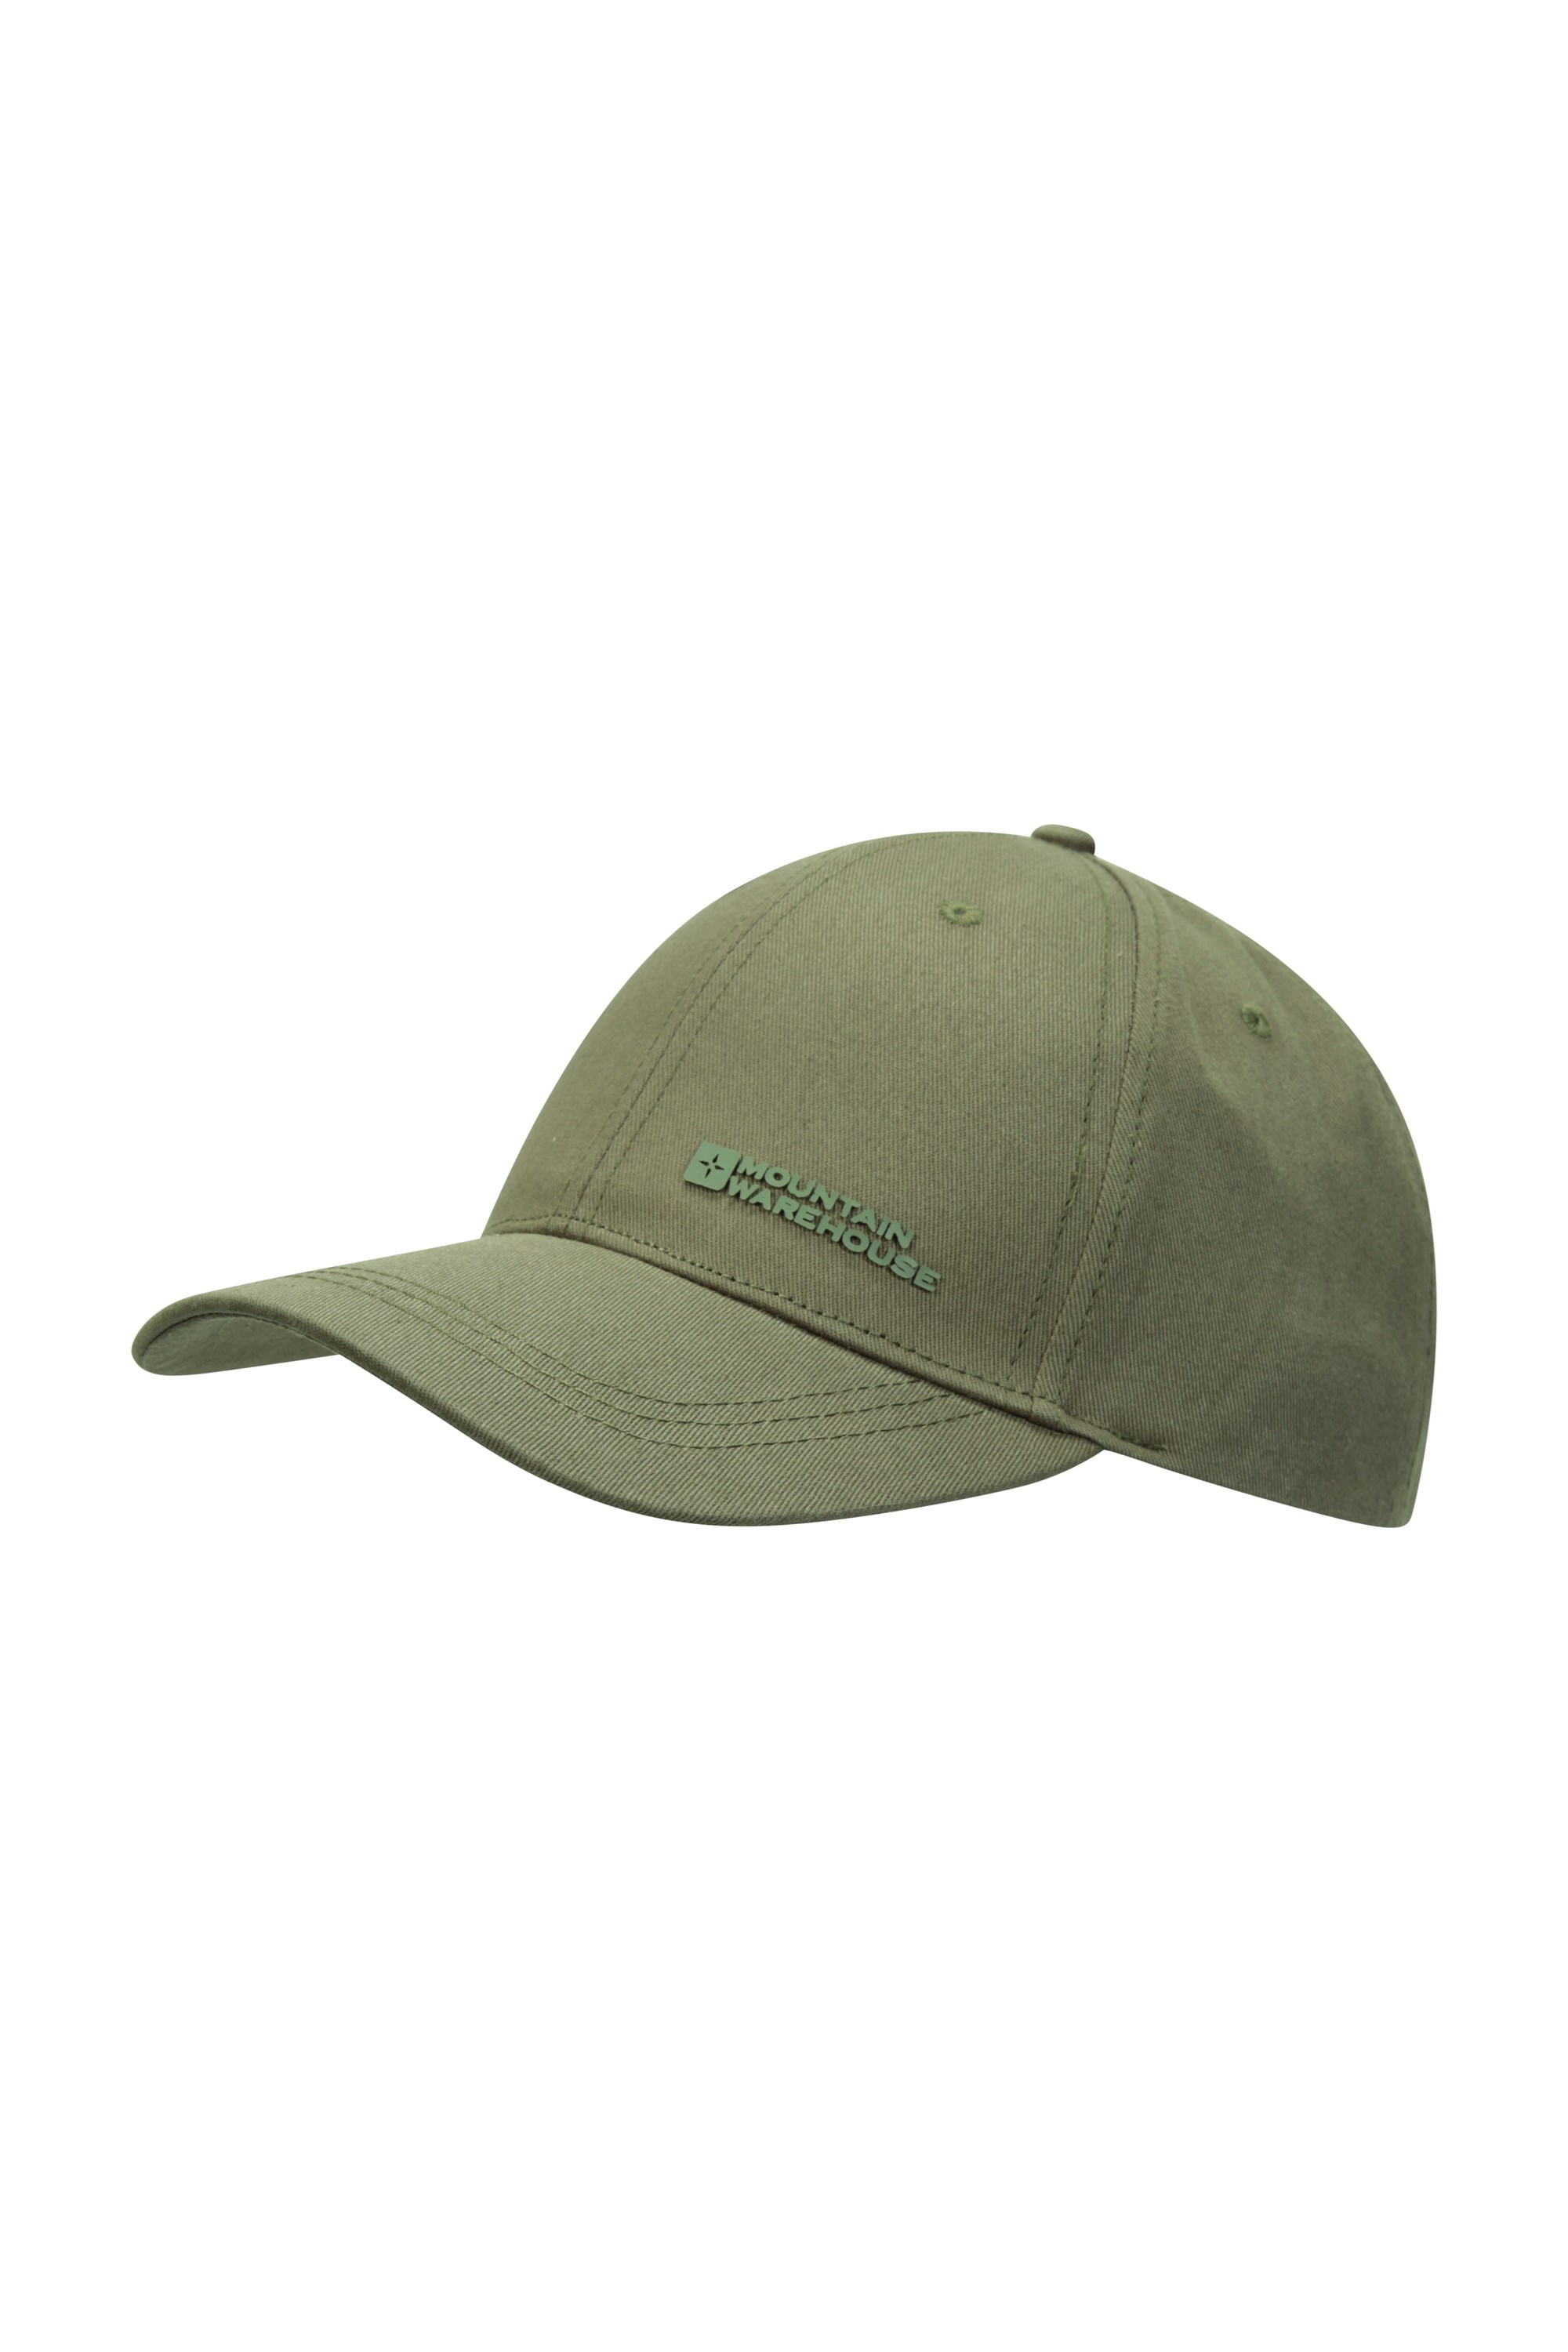 Twill Design Mountain Warehouse Mens Baseball Cap Lightweight Grey 100% Cotton Cap Hat